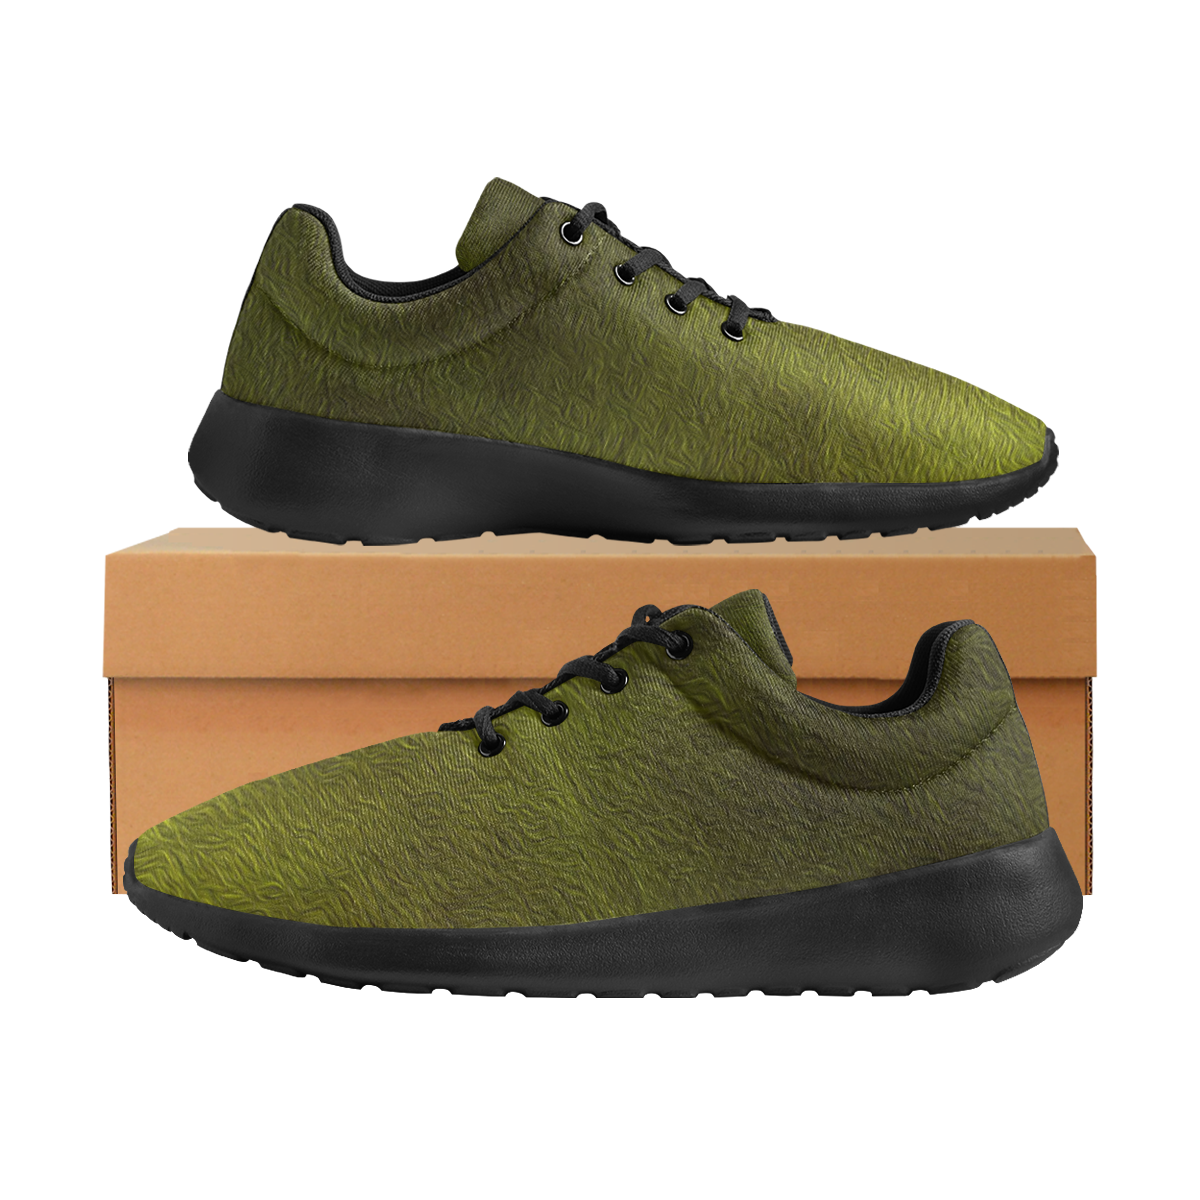 Green Vines Women's Athletic Shoes (Model 0200)